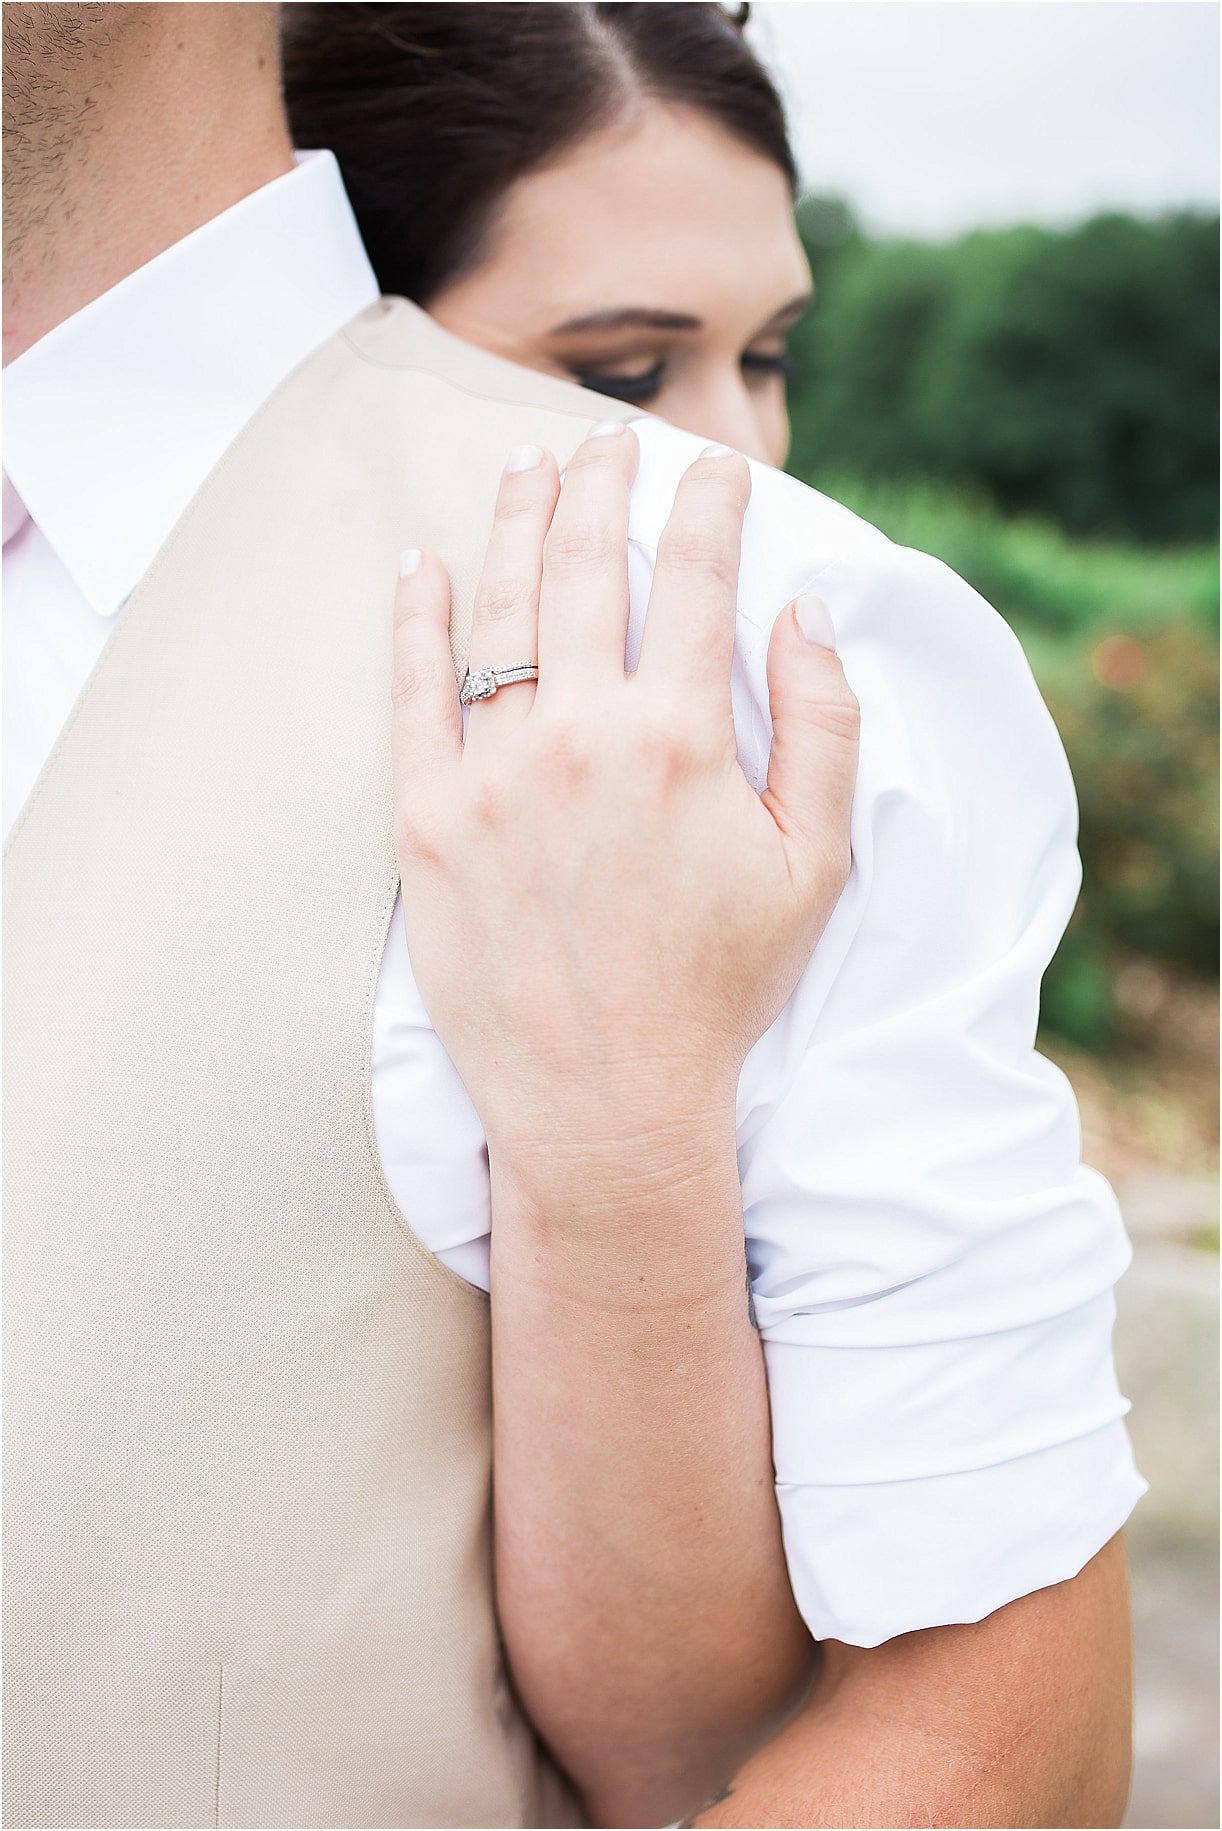 Sentimental Vow Renewal | Hill City Bride Virginia Wedding Blog by Robin Collins Photography